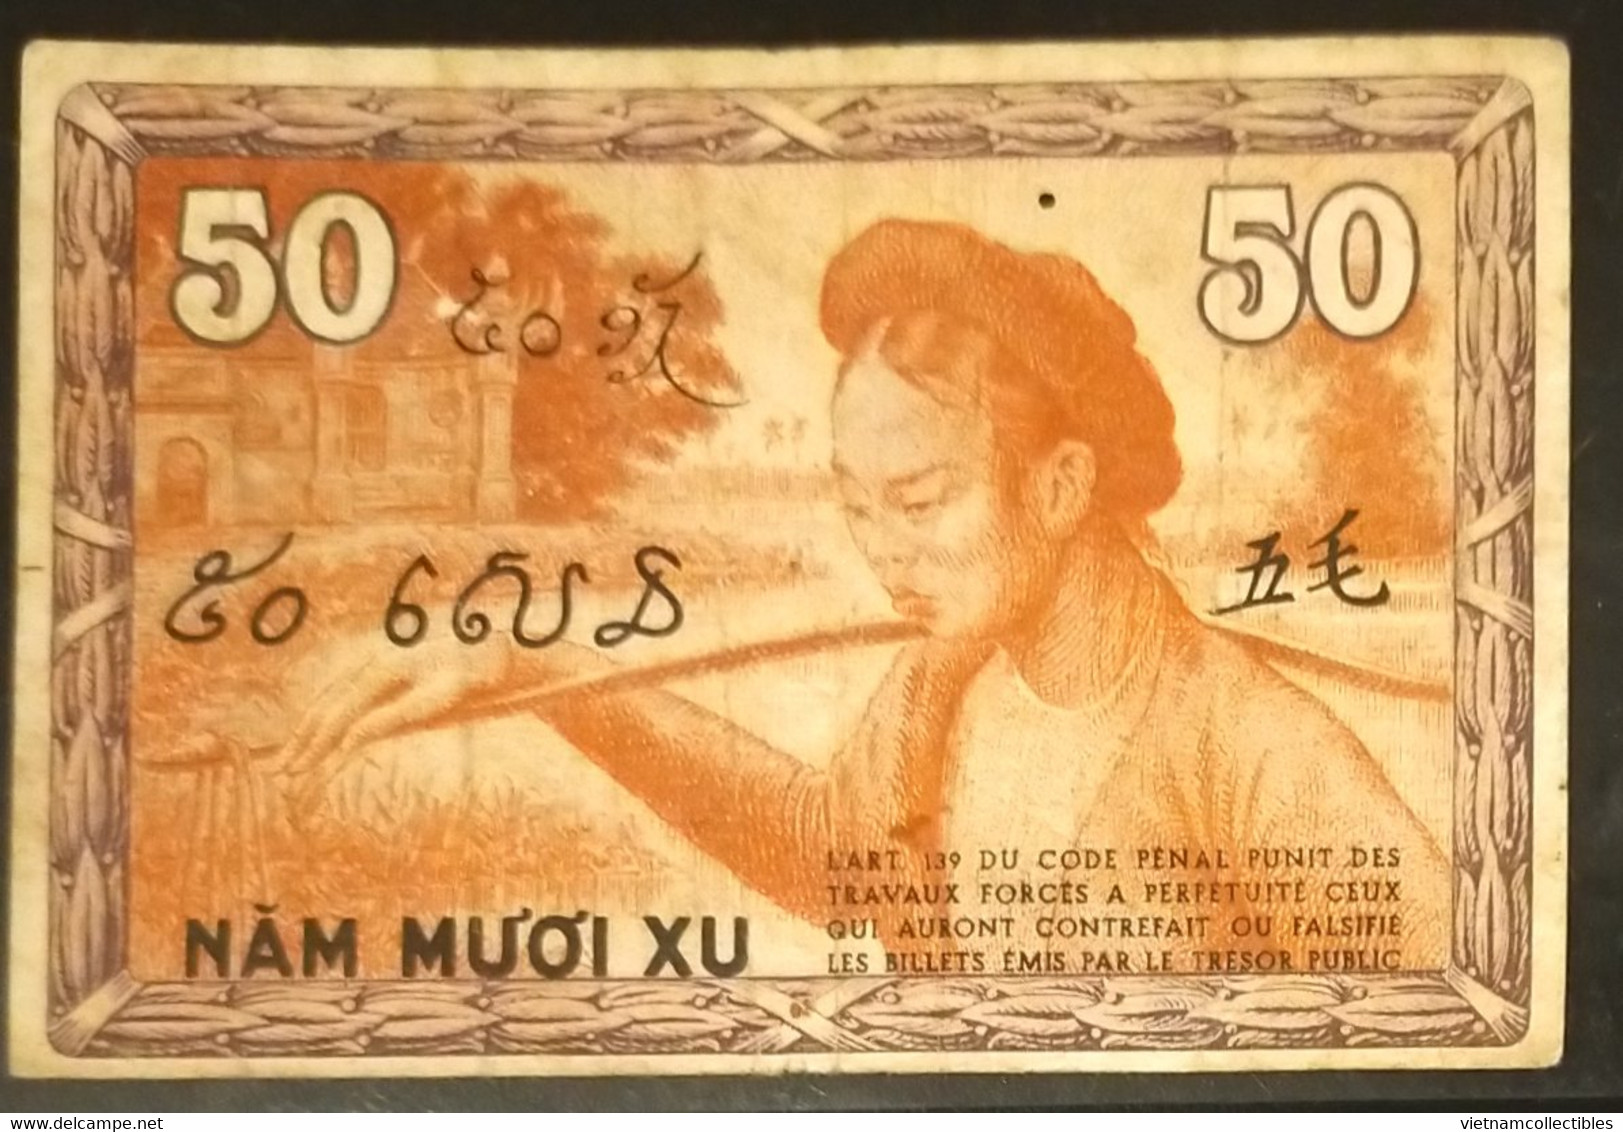 French Indochine Indochina Vietnam Viet Nam Laos Cambodia 50 Cents VF Banknote Note 1939 - Pick # 87e / 2 Photos - Indochina